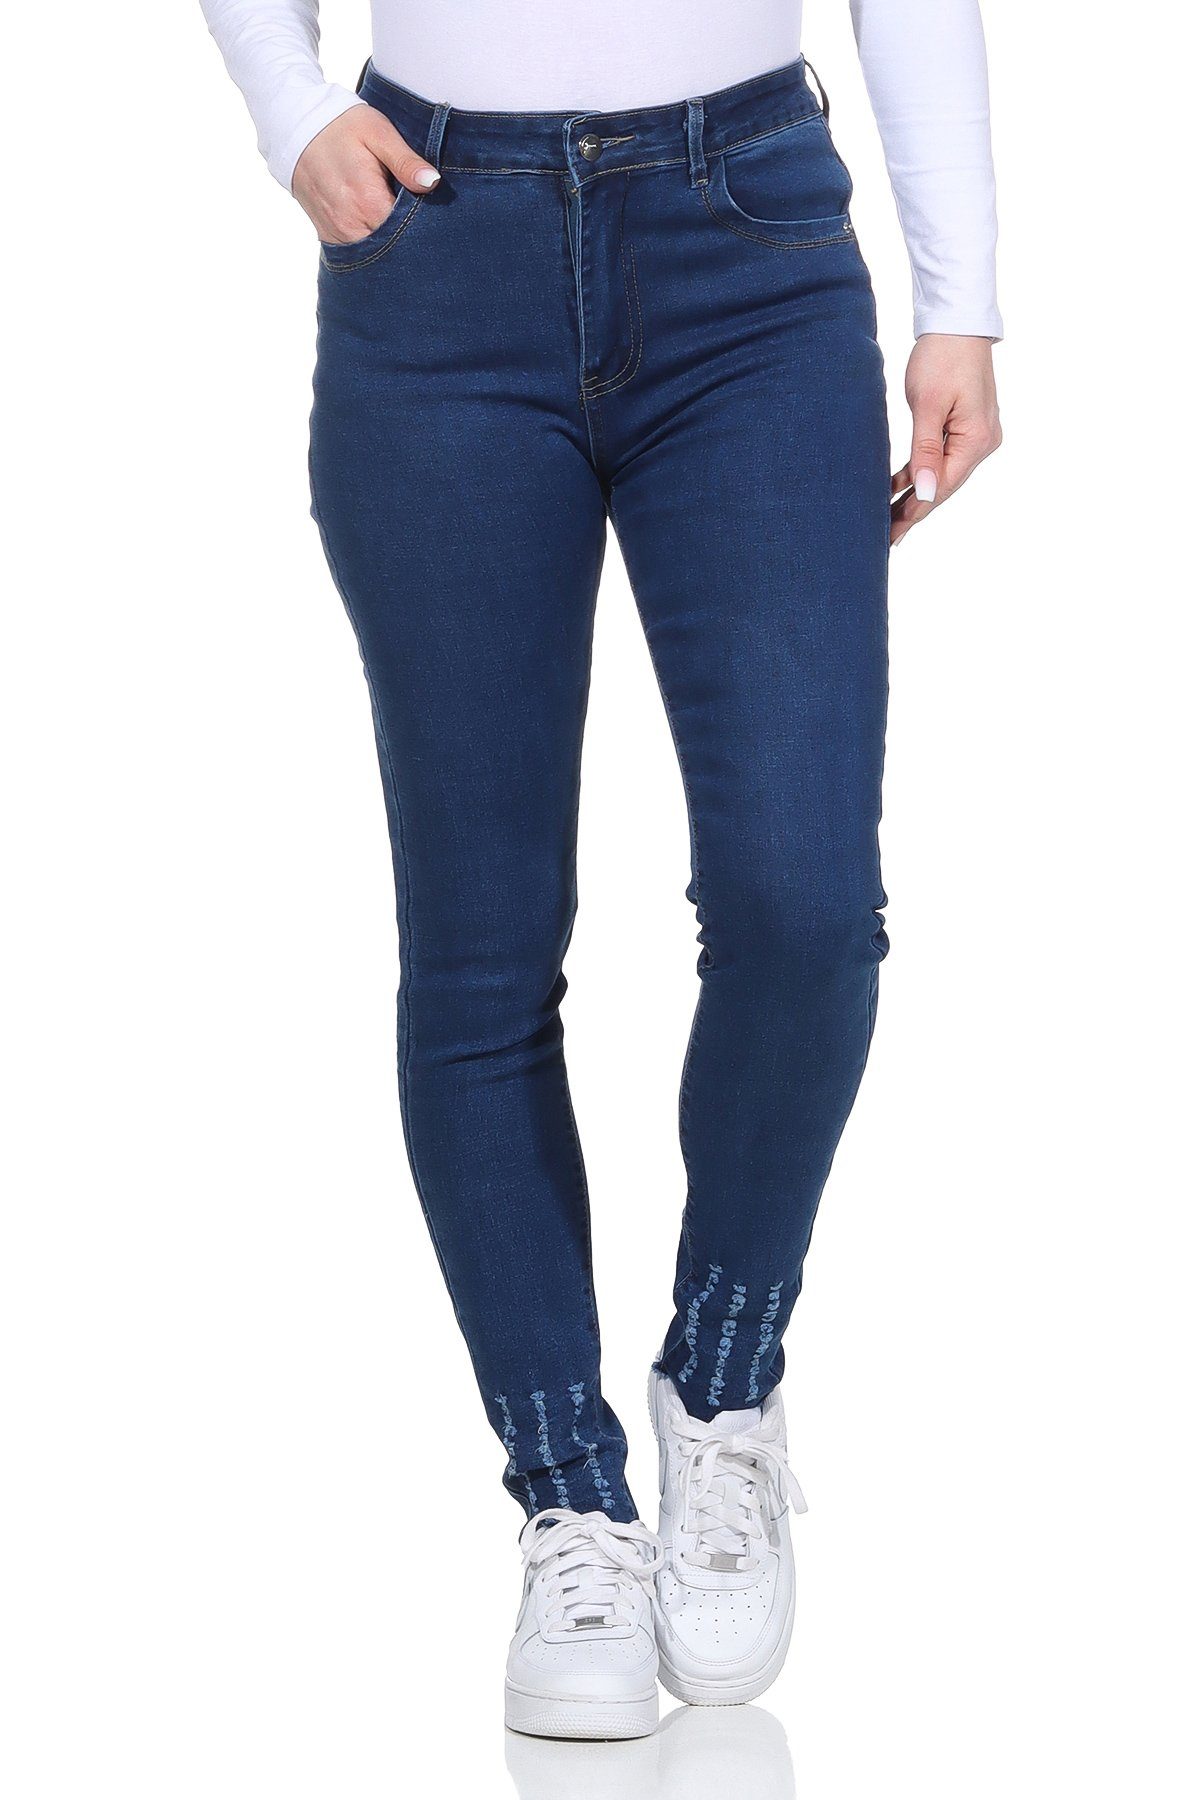 Aurela Damenmode Stretch Jeans Distressed Jeanshosen Look moderner Damen Dunkelblau 5-Pocket-Jeans Look für Destroyed